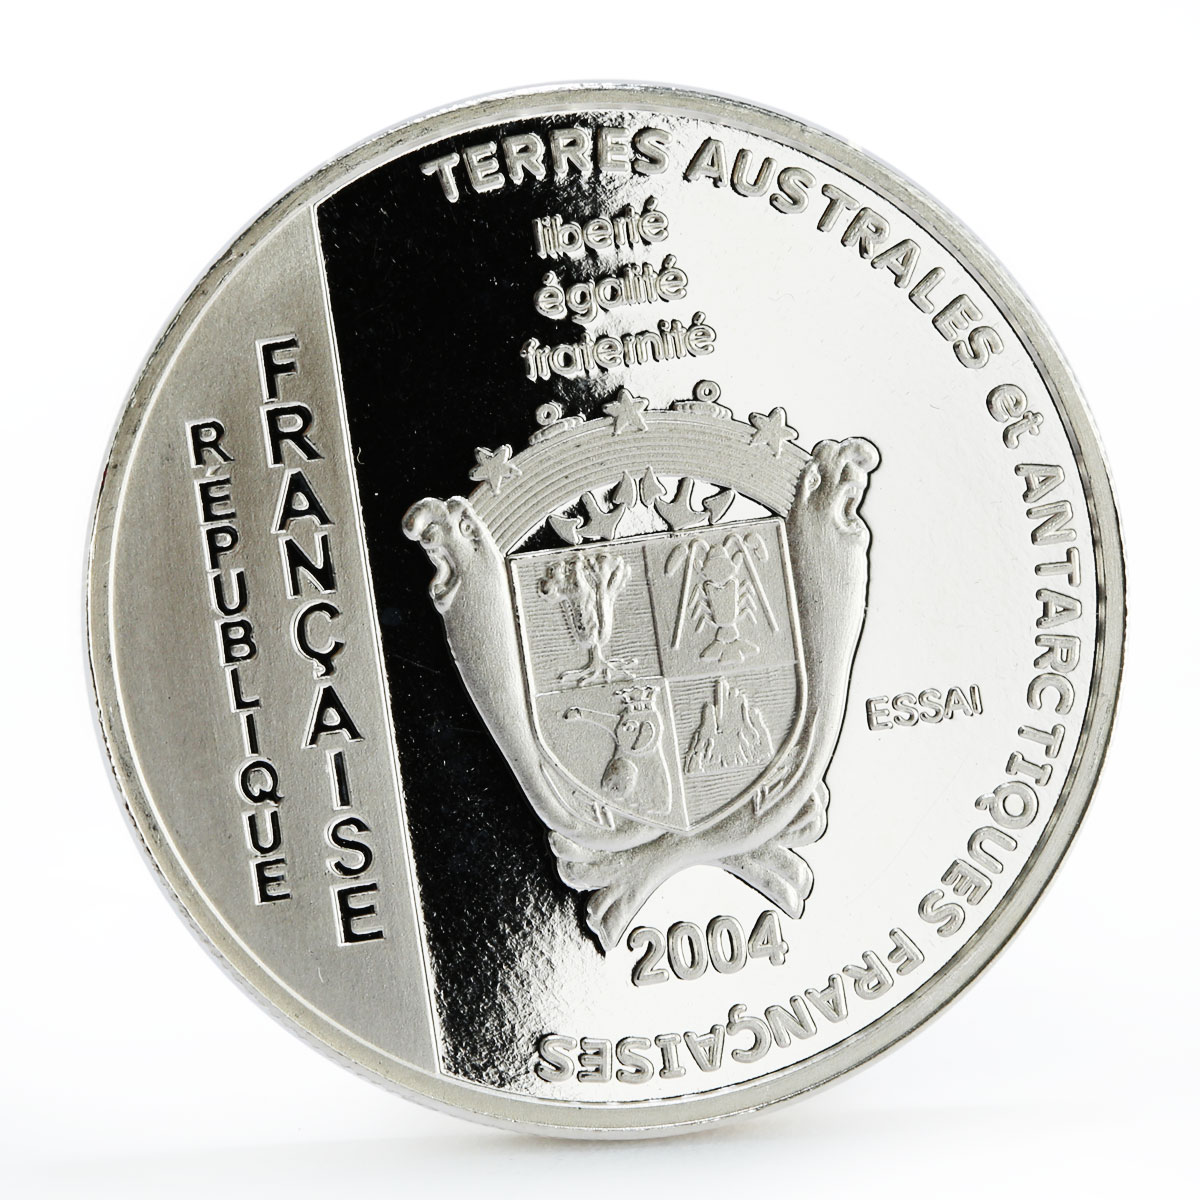 France 1 1/2 euro Corvette Astrolabe Ship Clipper proof silver coin 2004